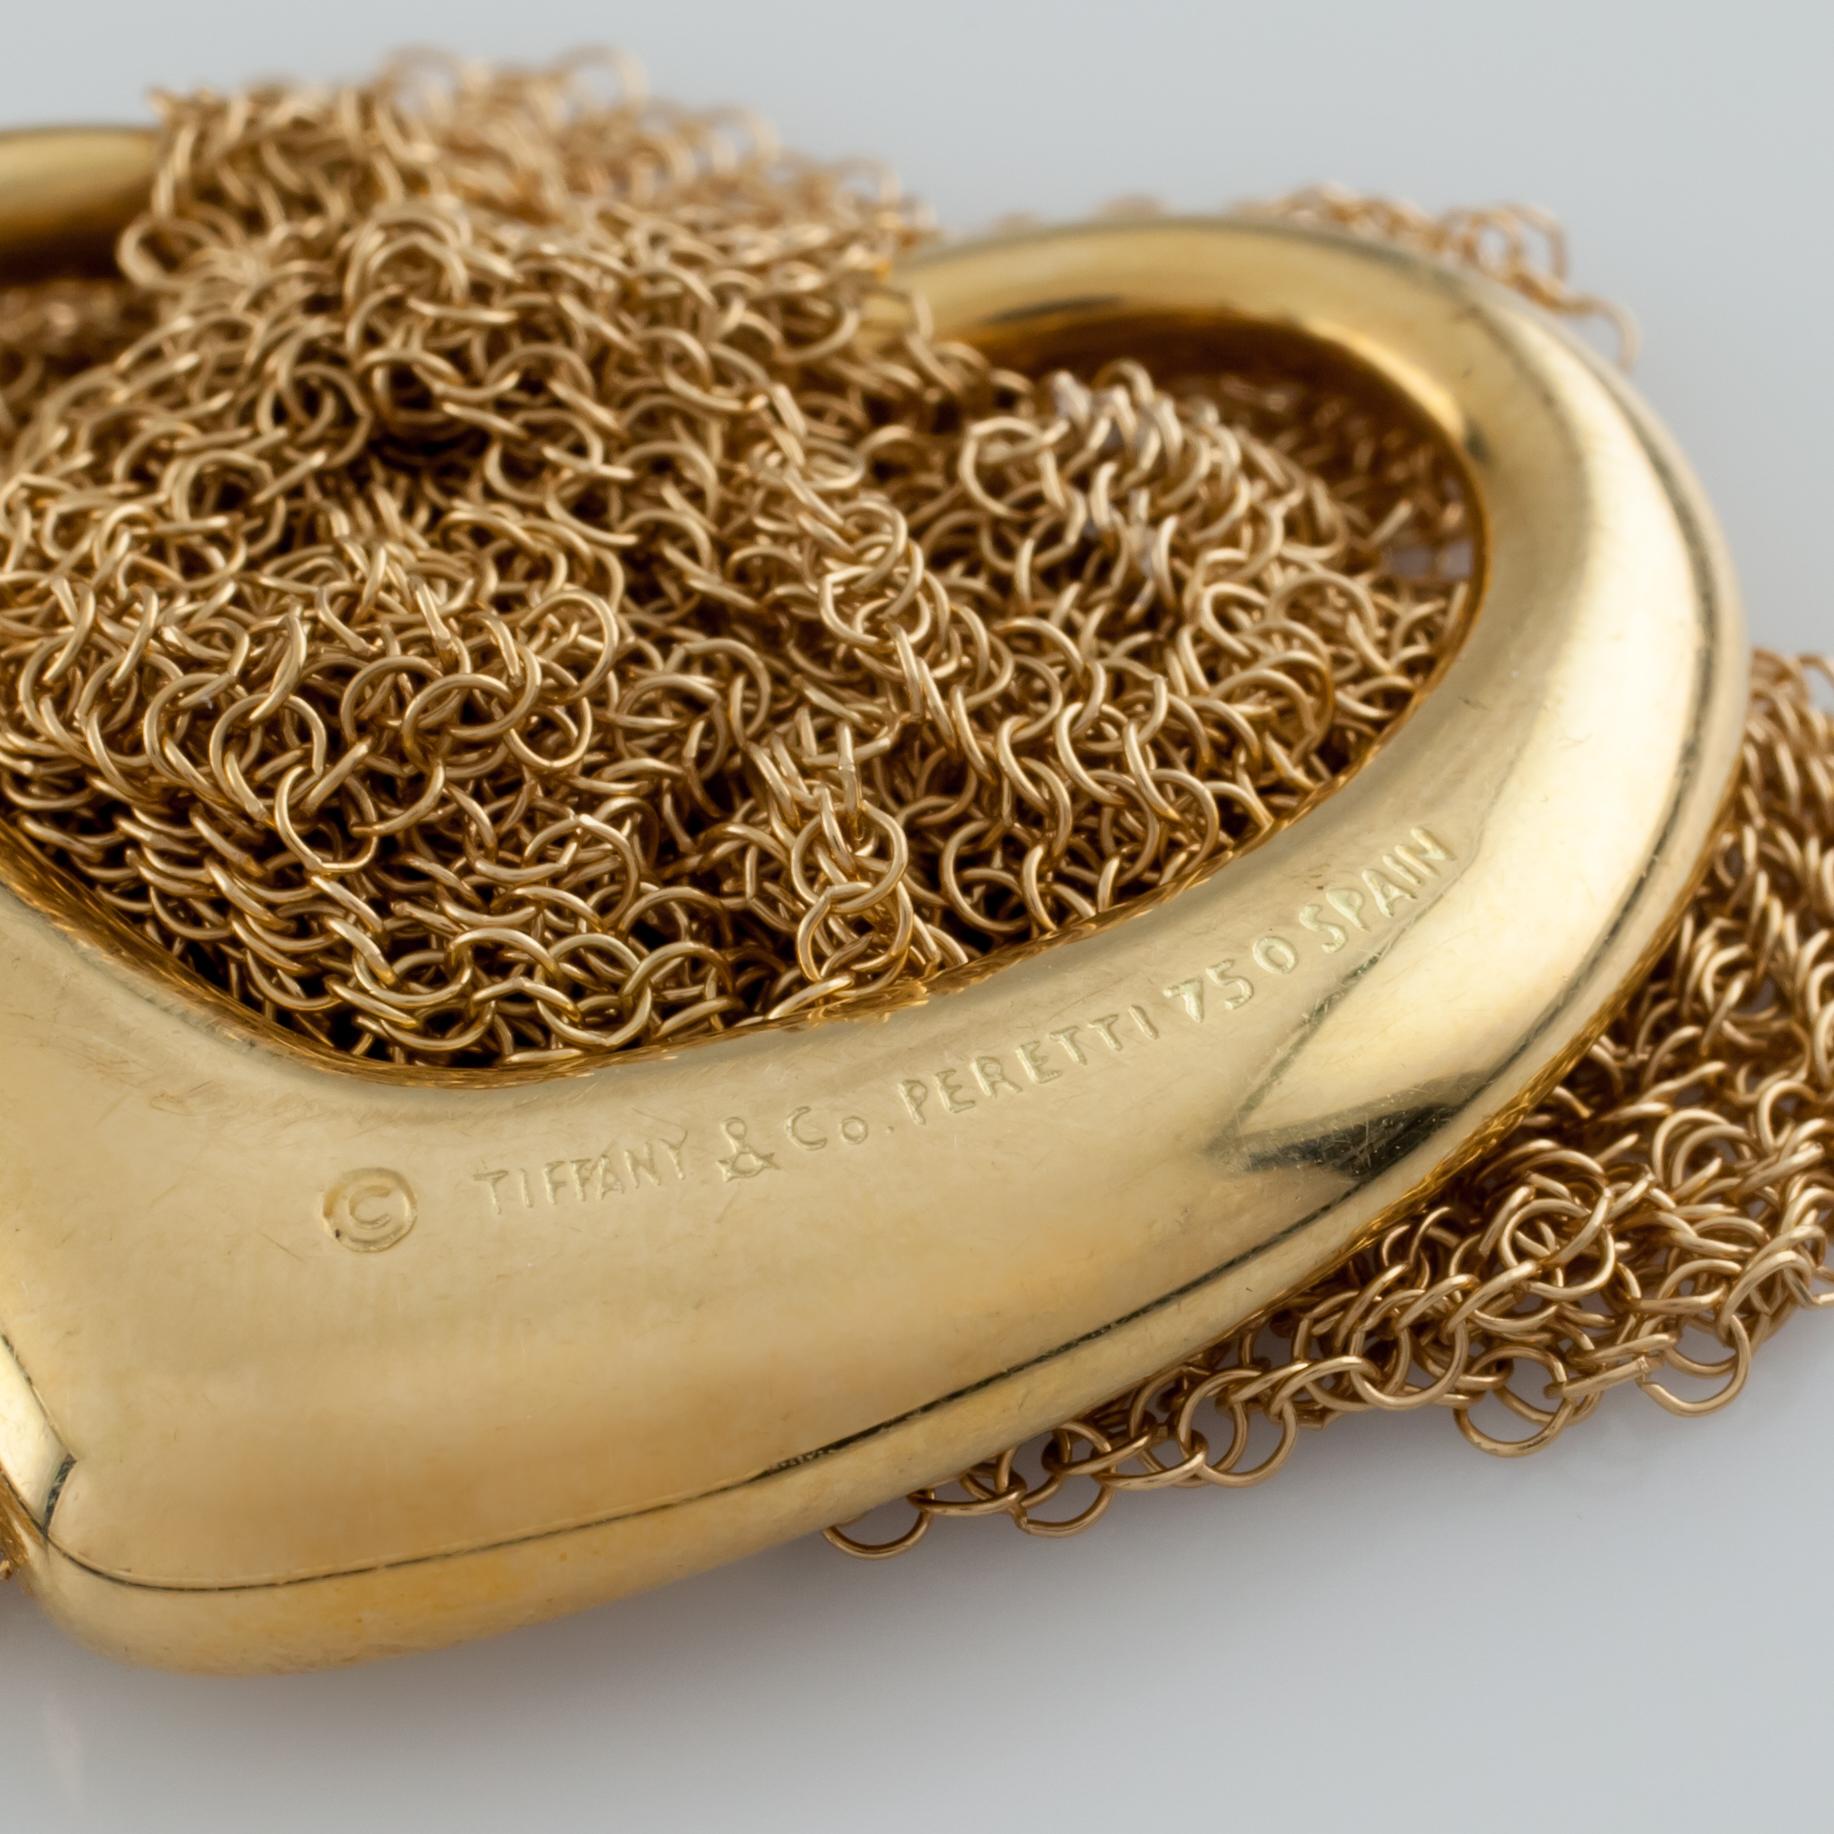 Tiffany & Co. Elsa Peretti Vintage 18 Karat Yellow Gold Open Heart Pendant 1